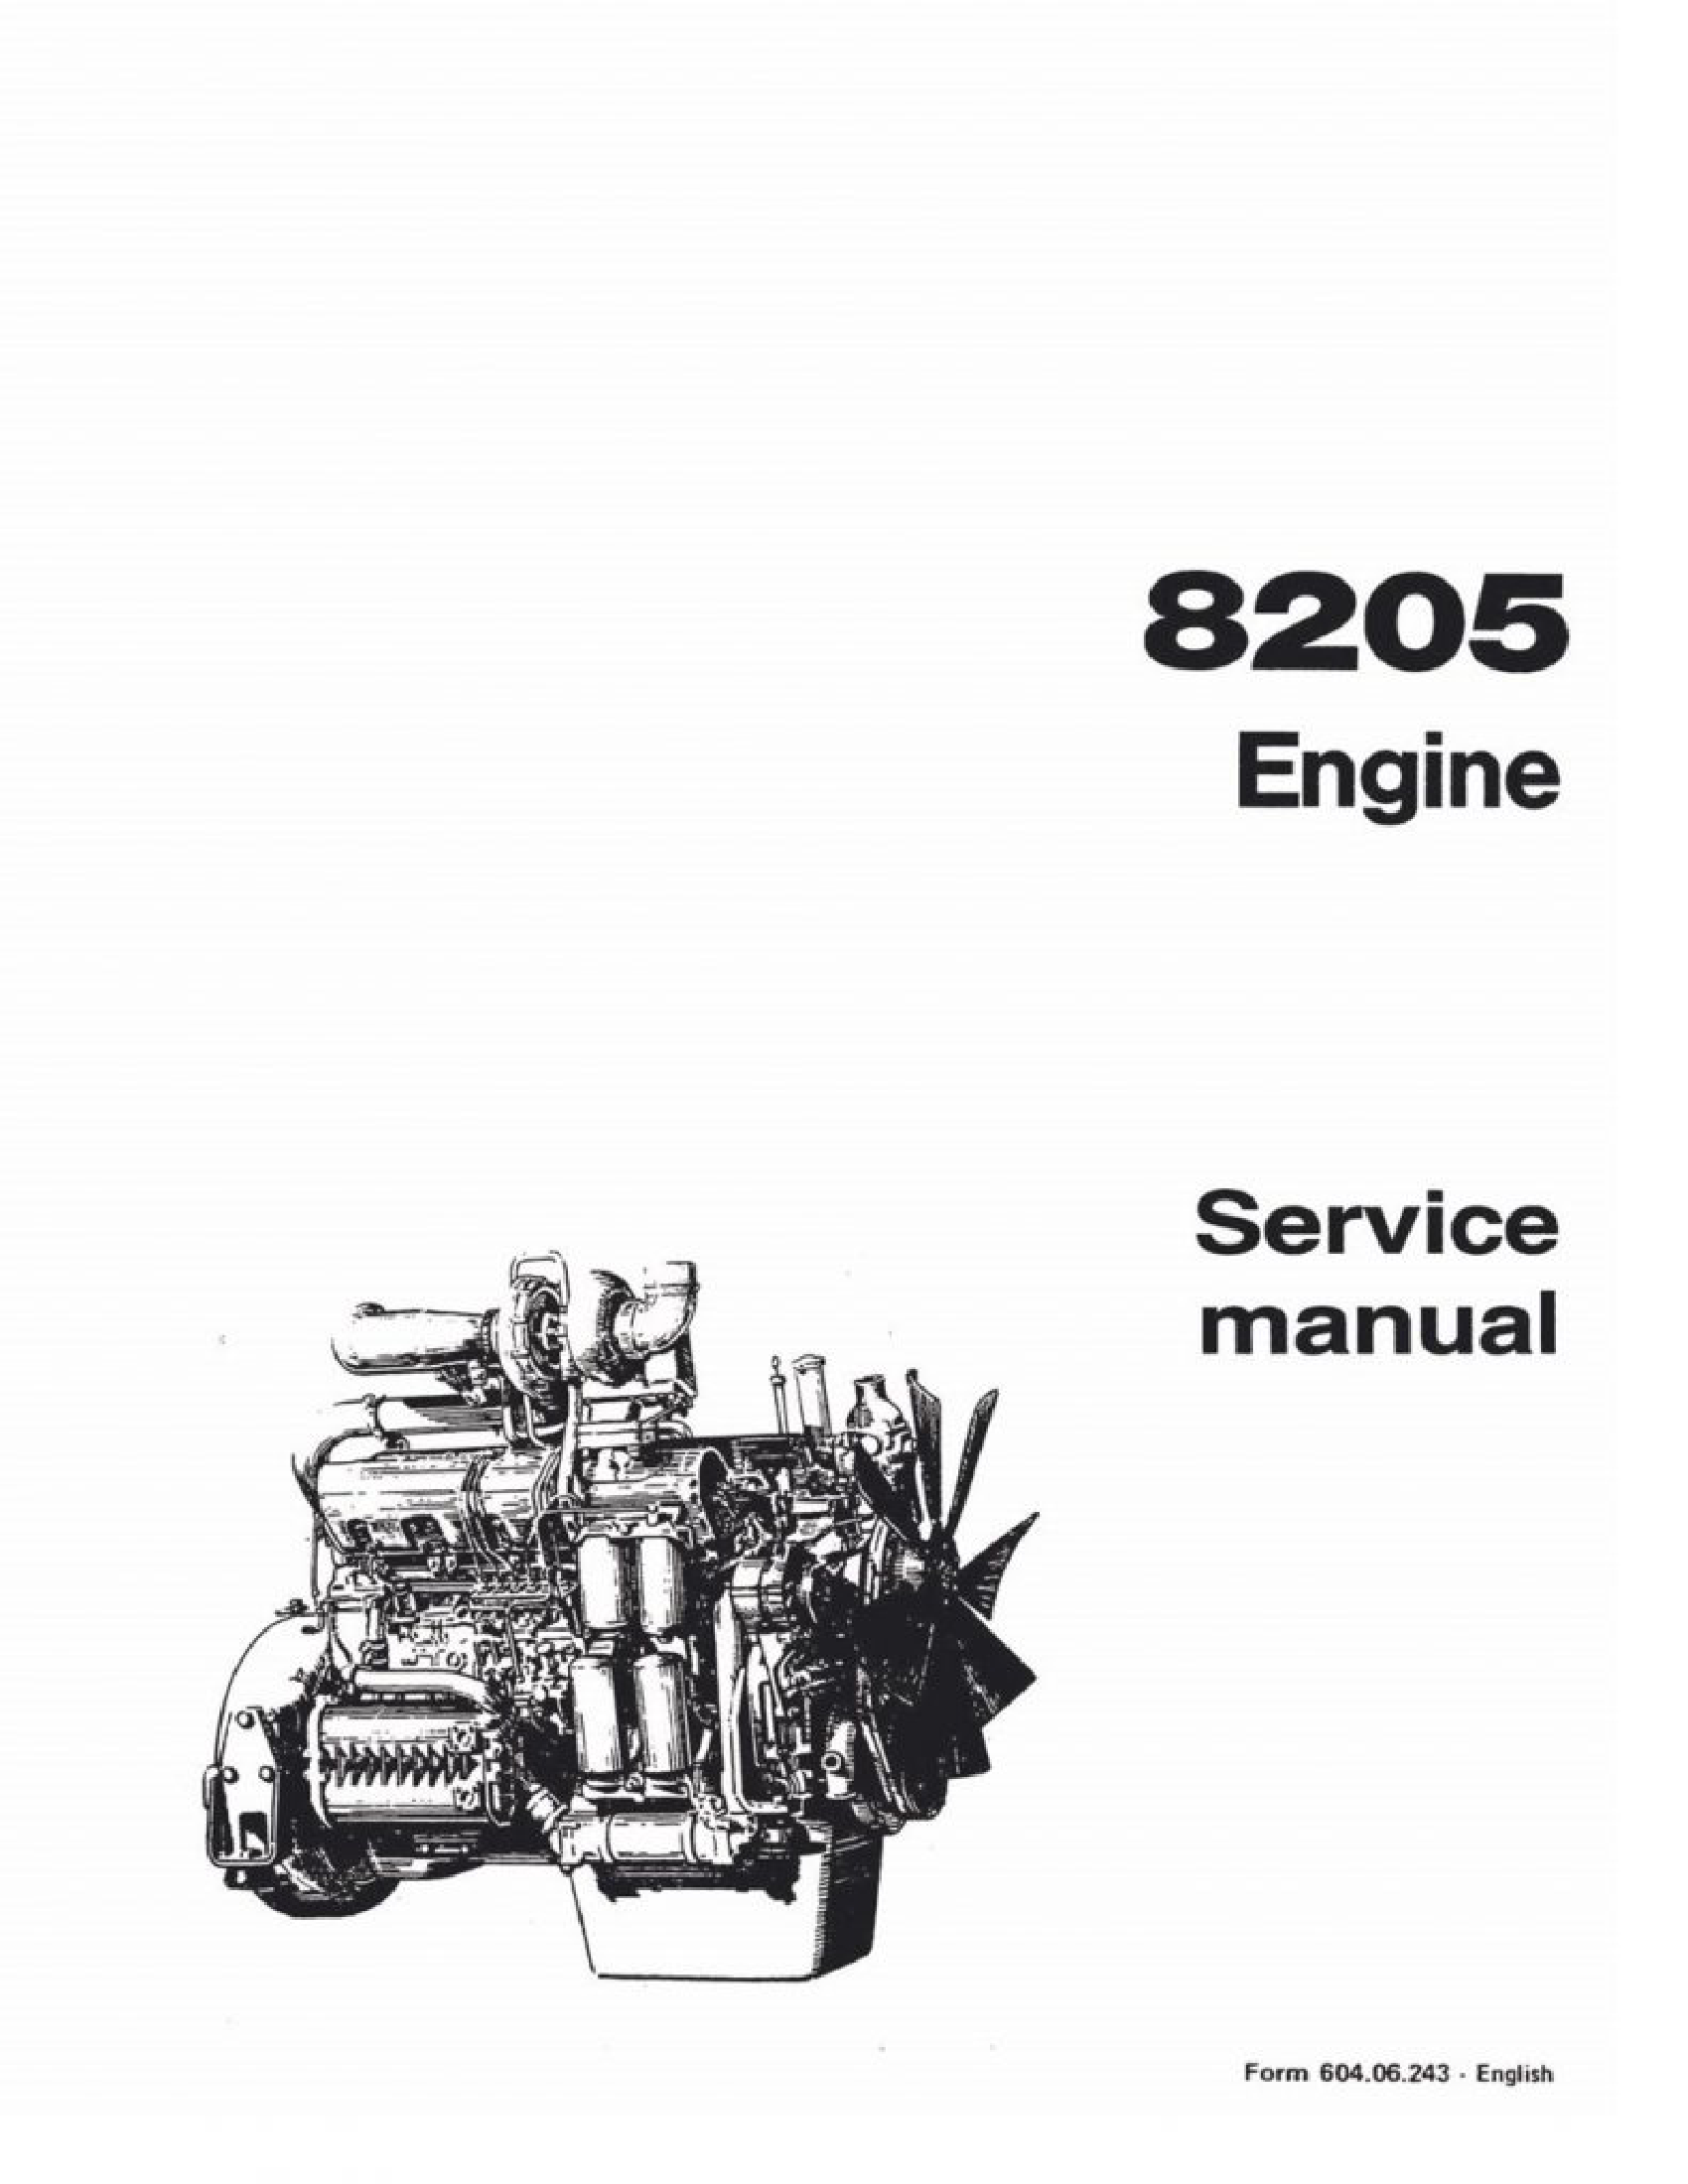 Fiat-Allis 8205 Engine manual